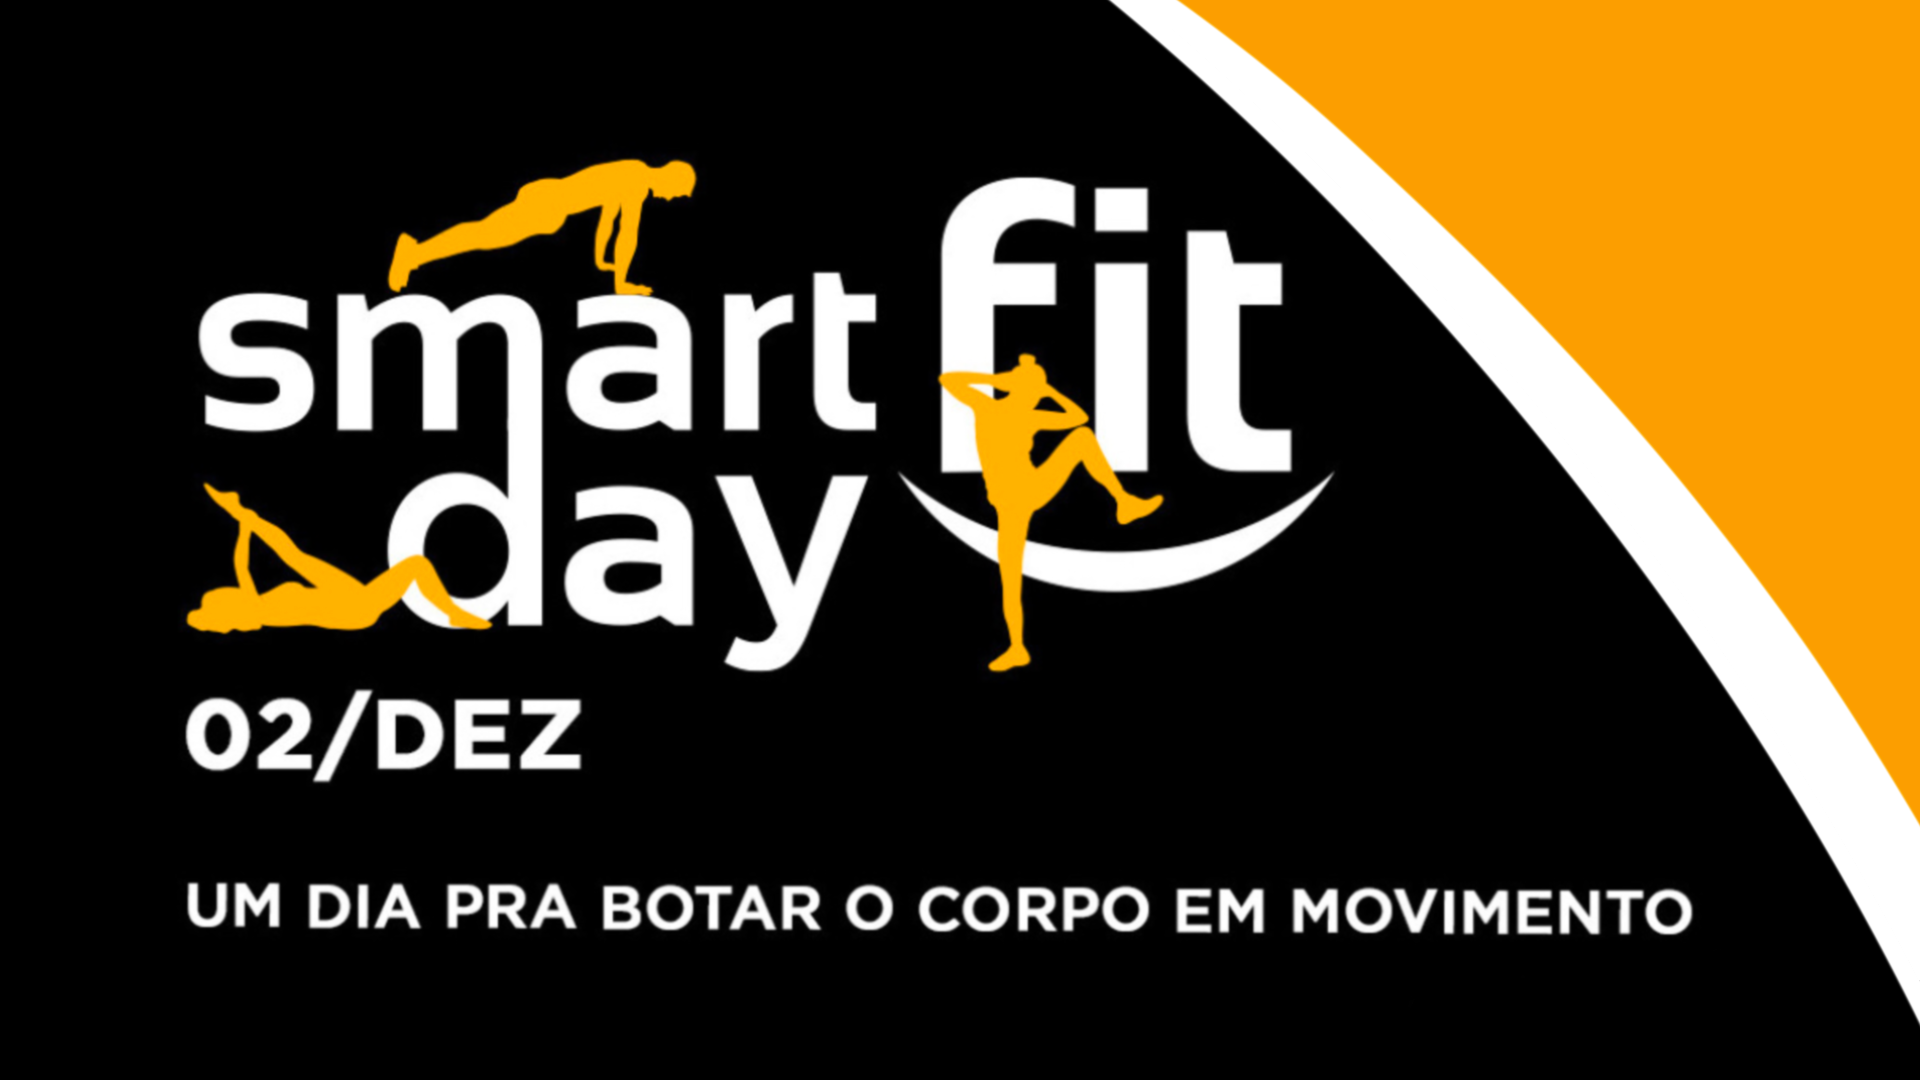 Deu a louca na Smart Fit! Rede de academias promove dia gratuito no Brasil